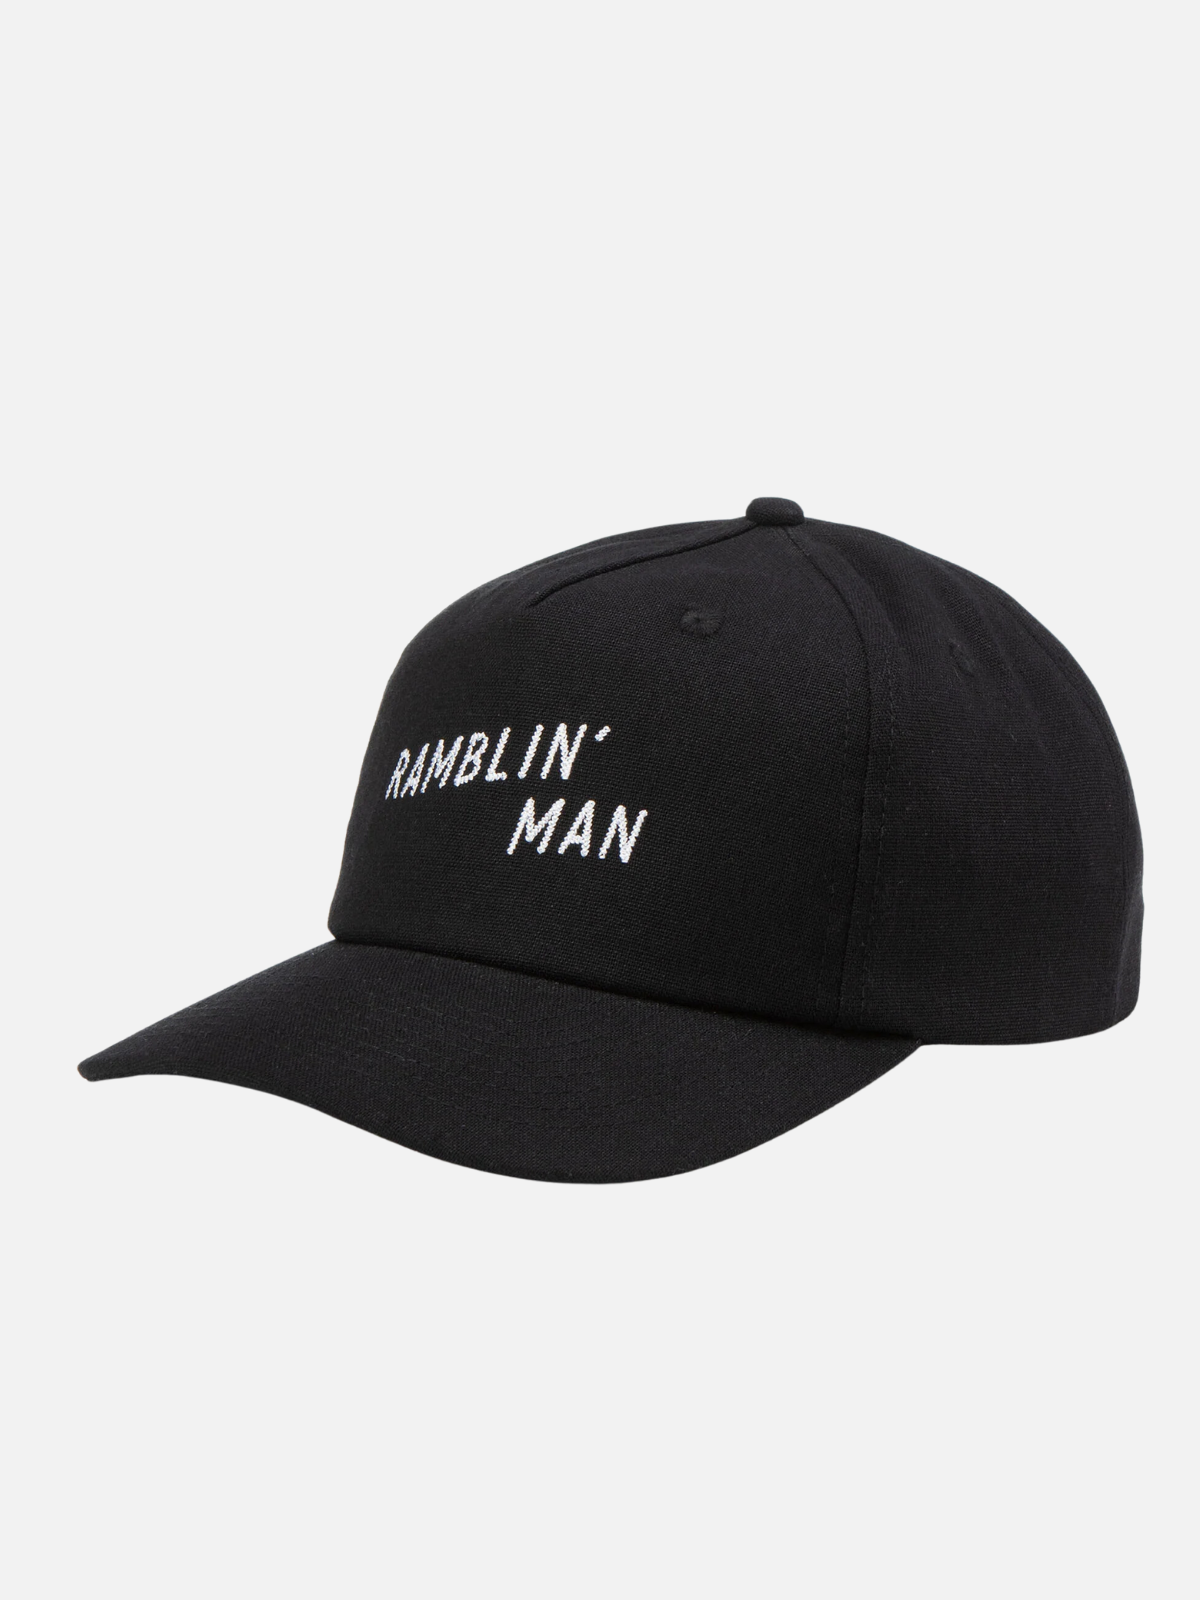 seager ramblin' man hemp cotton blend snapback black white hat kempt athens ga georgia men's clothing store